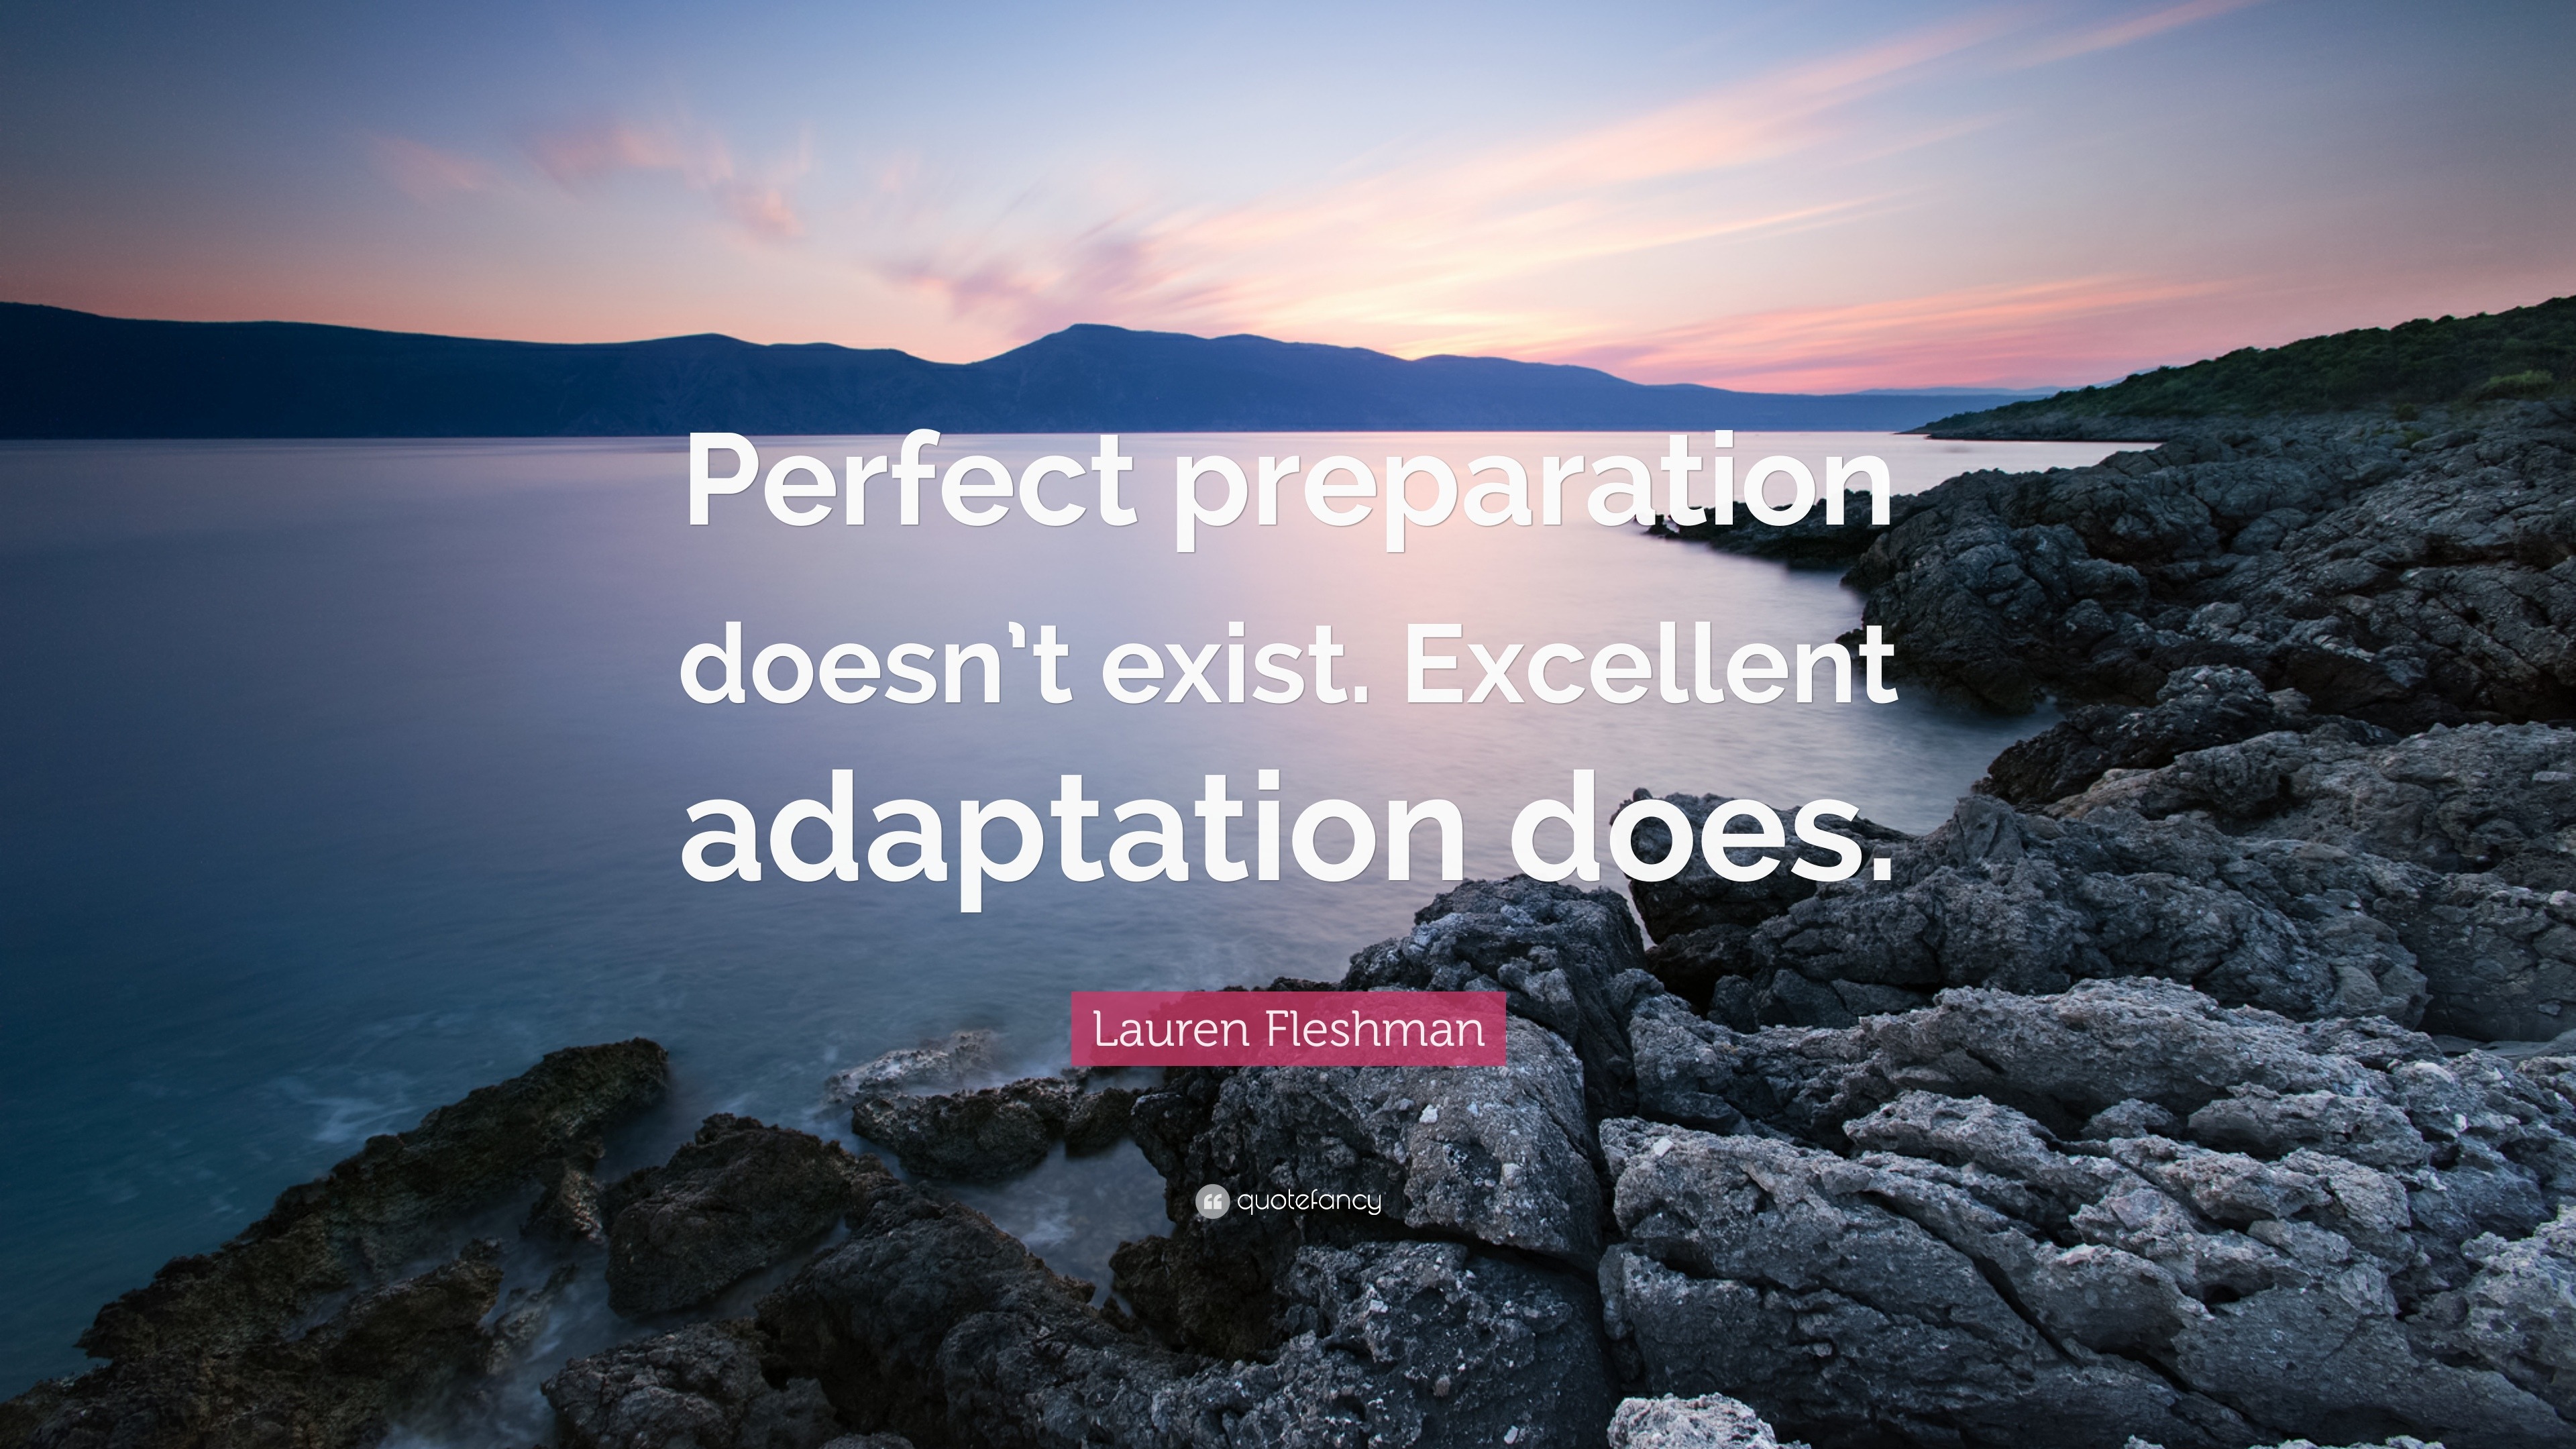 Lauren Fleshman Quote: “Perfect preparation doesn't exist. Excellent  adaptation does.”